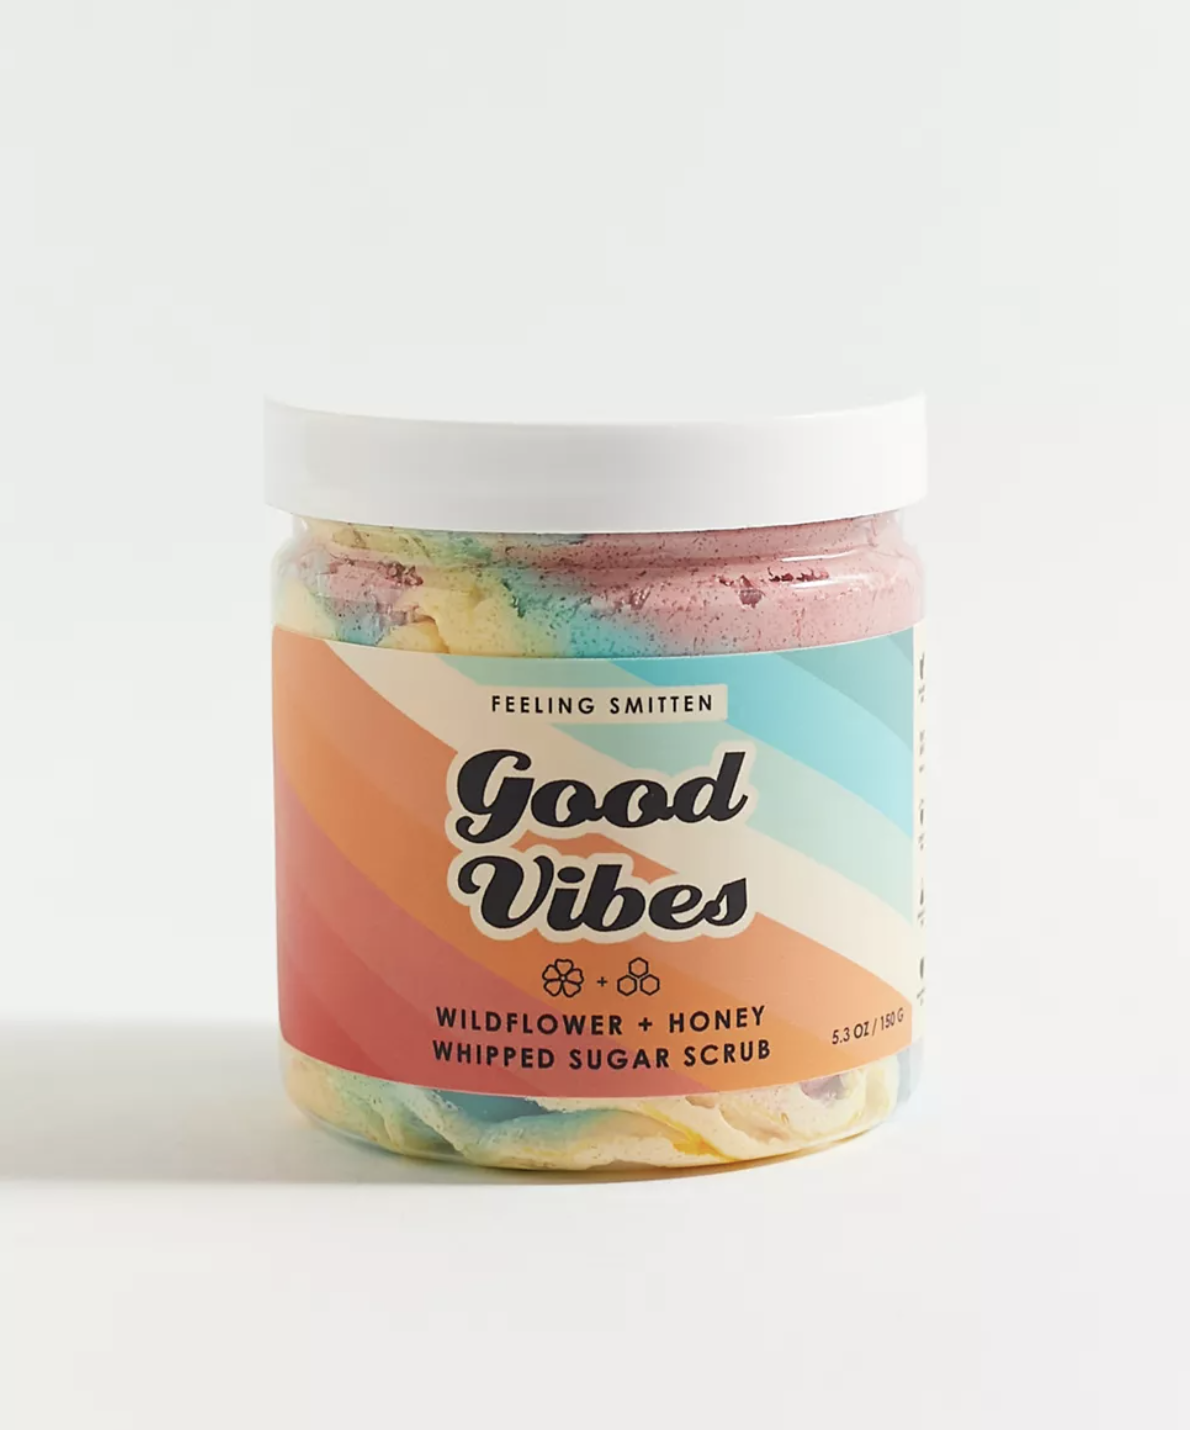 Good Vibes Whipped Sugar Scrub - The Good Life Vibe